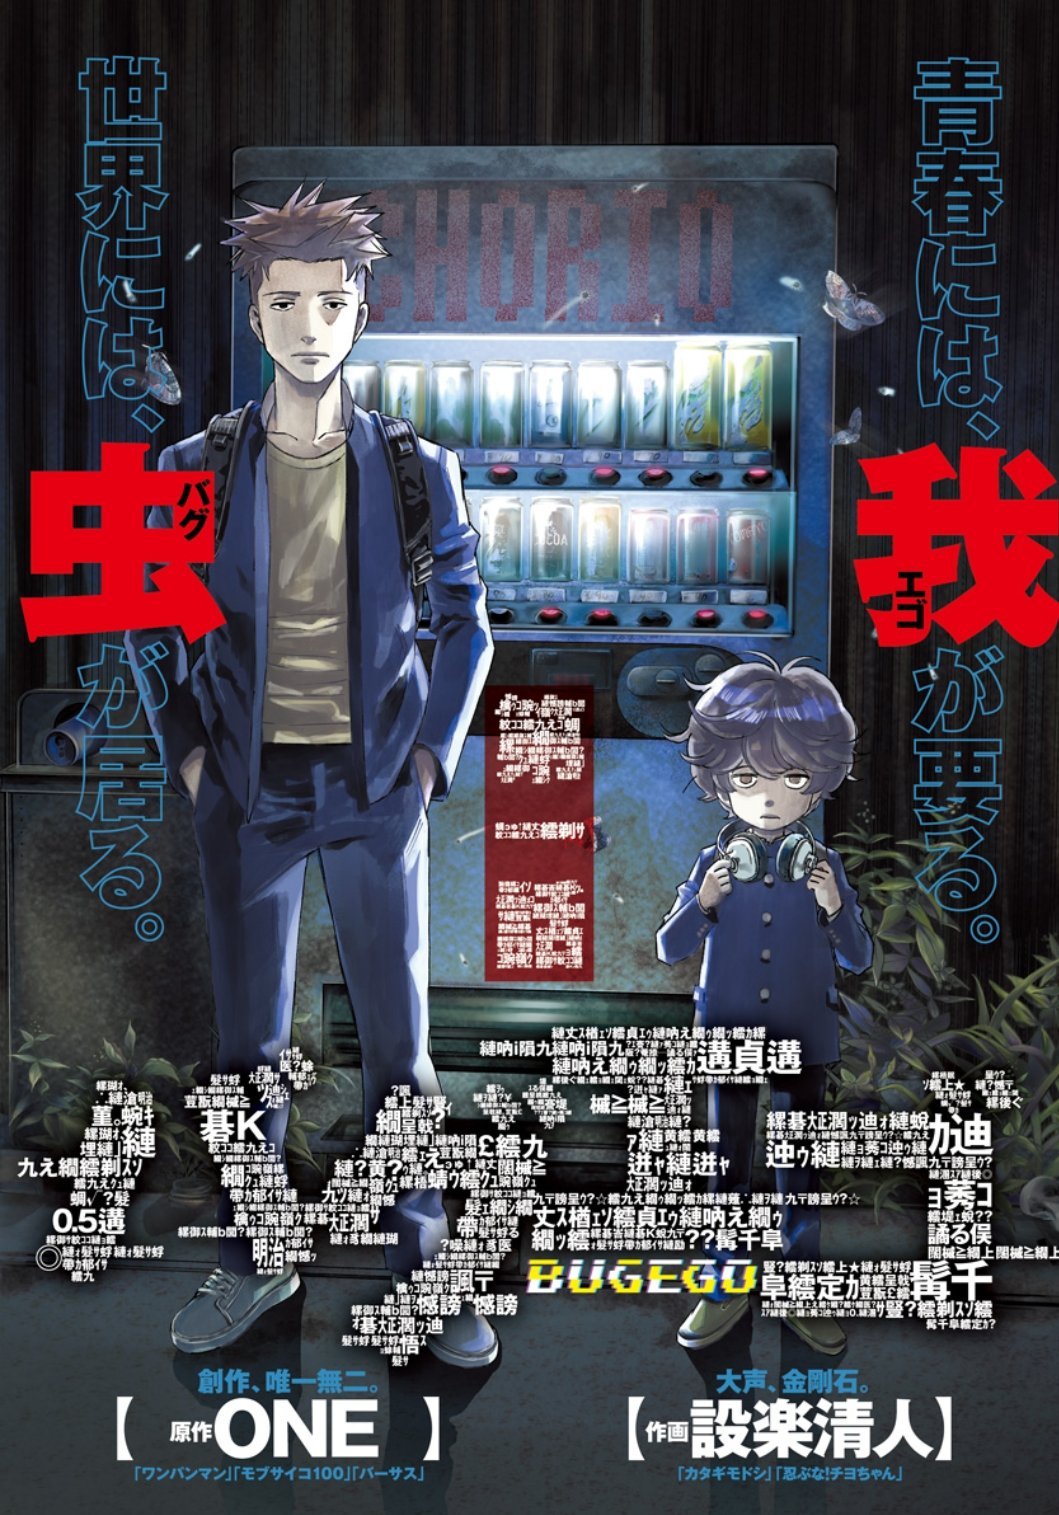 Manga Mogura RE on X: Rurouni Kenshin: Meiji Kenkaku Romantan & Oshi no  Ko are on cover and backover of TV Guide AStars Vol.03.   / X